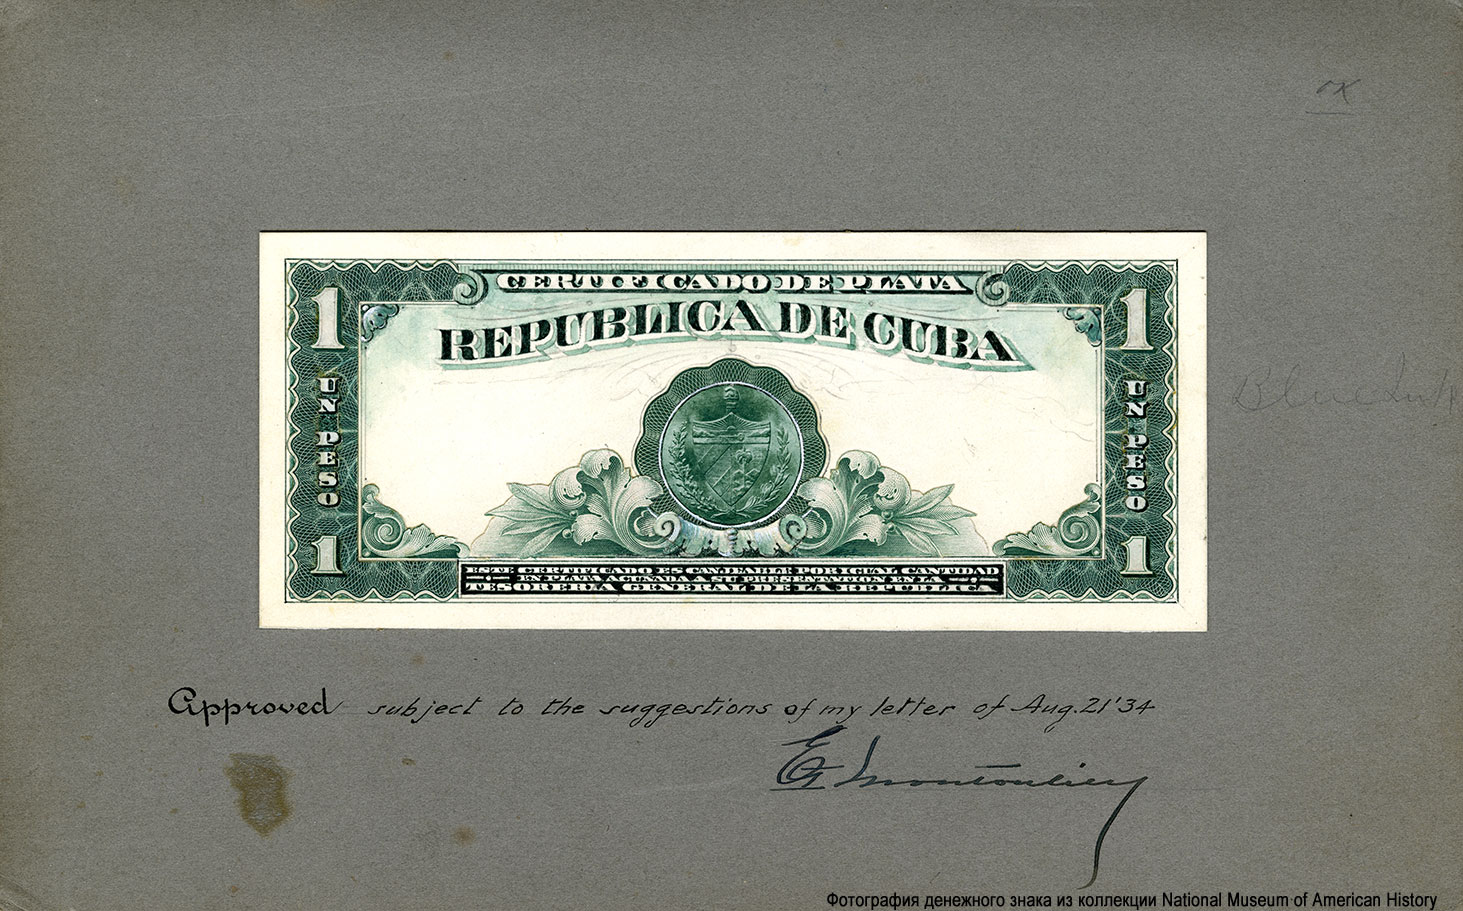 República de Cuba 1 Peso. Progress Proofs of BEP issued Silver Certificates